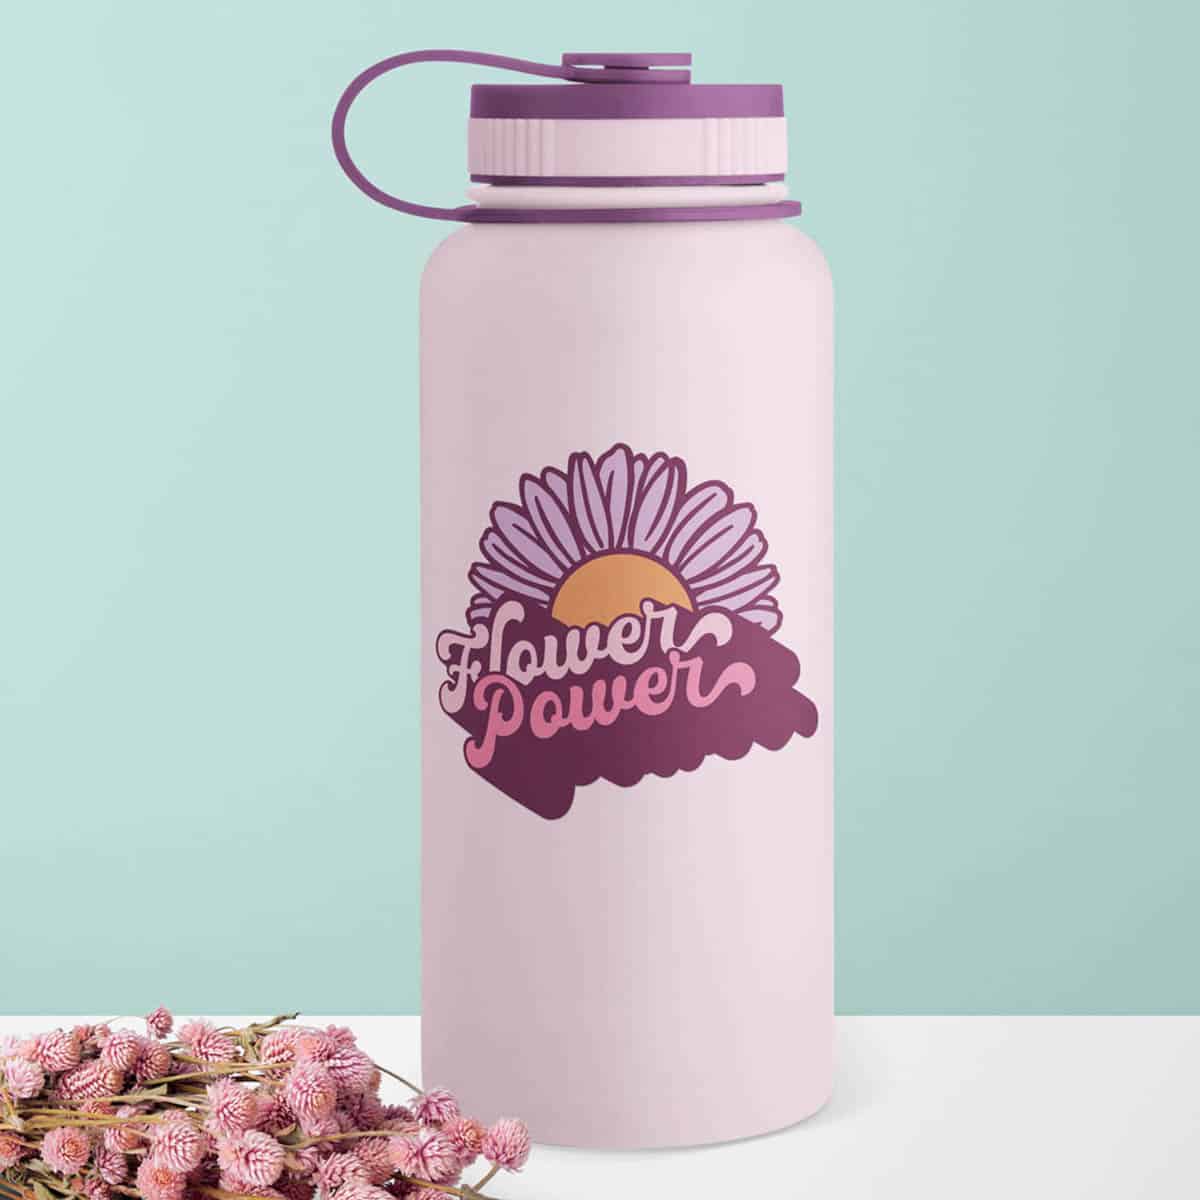 Flower Power Drink Bottle by Persia Lou Designs